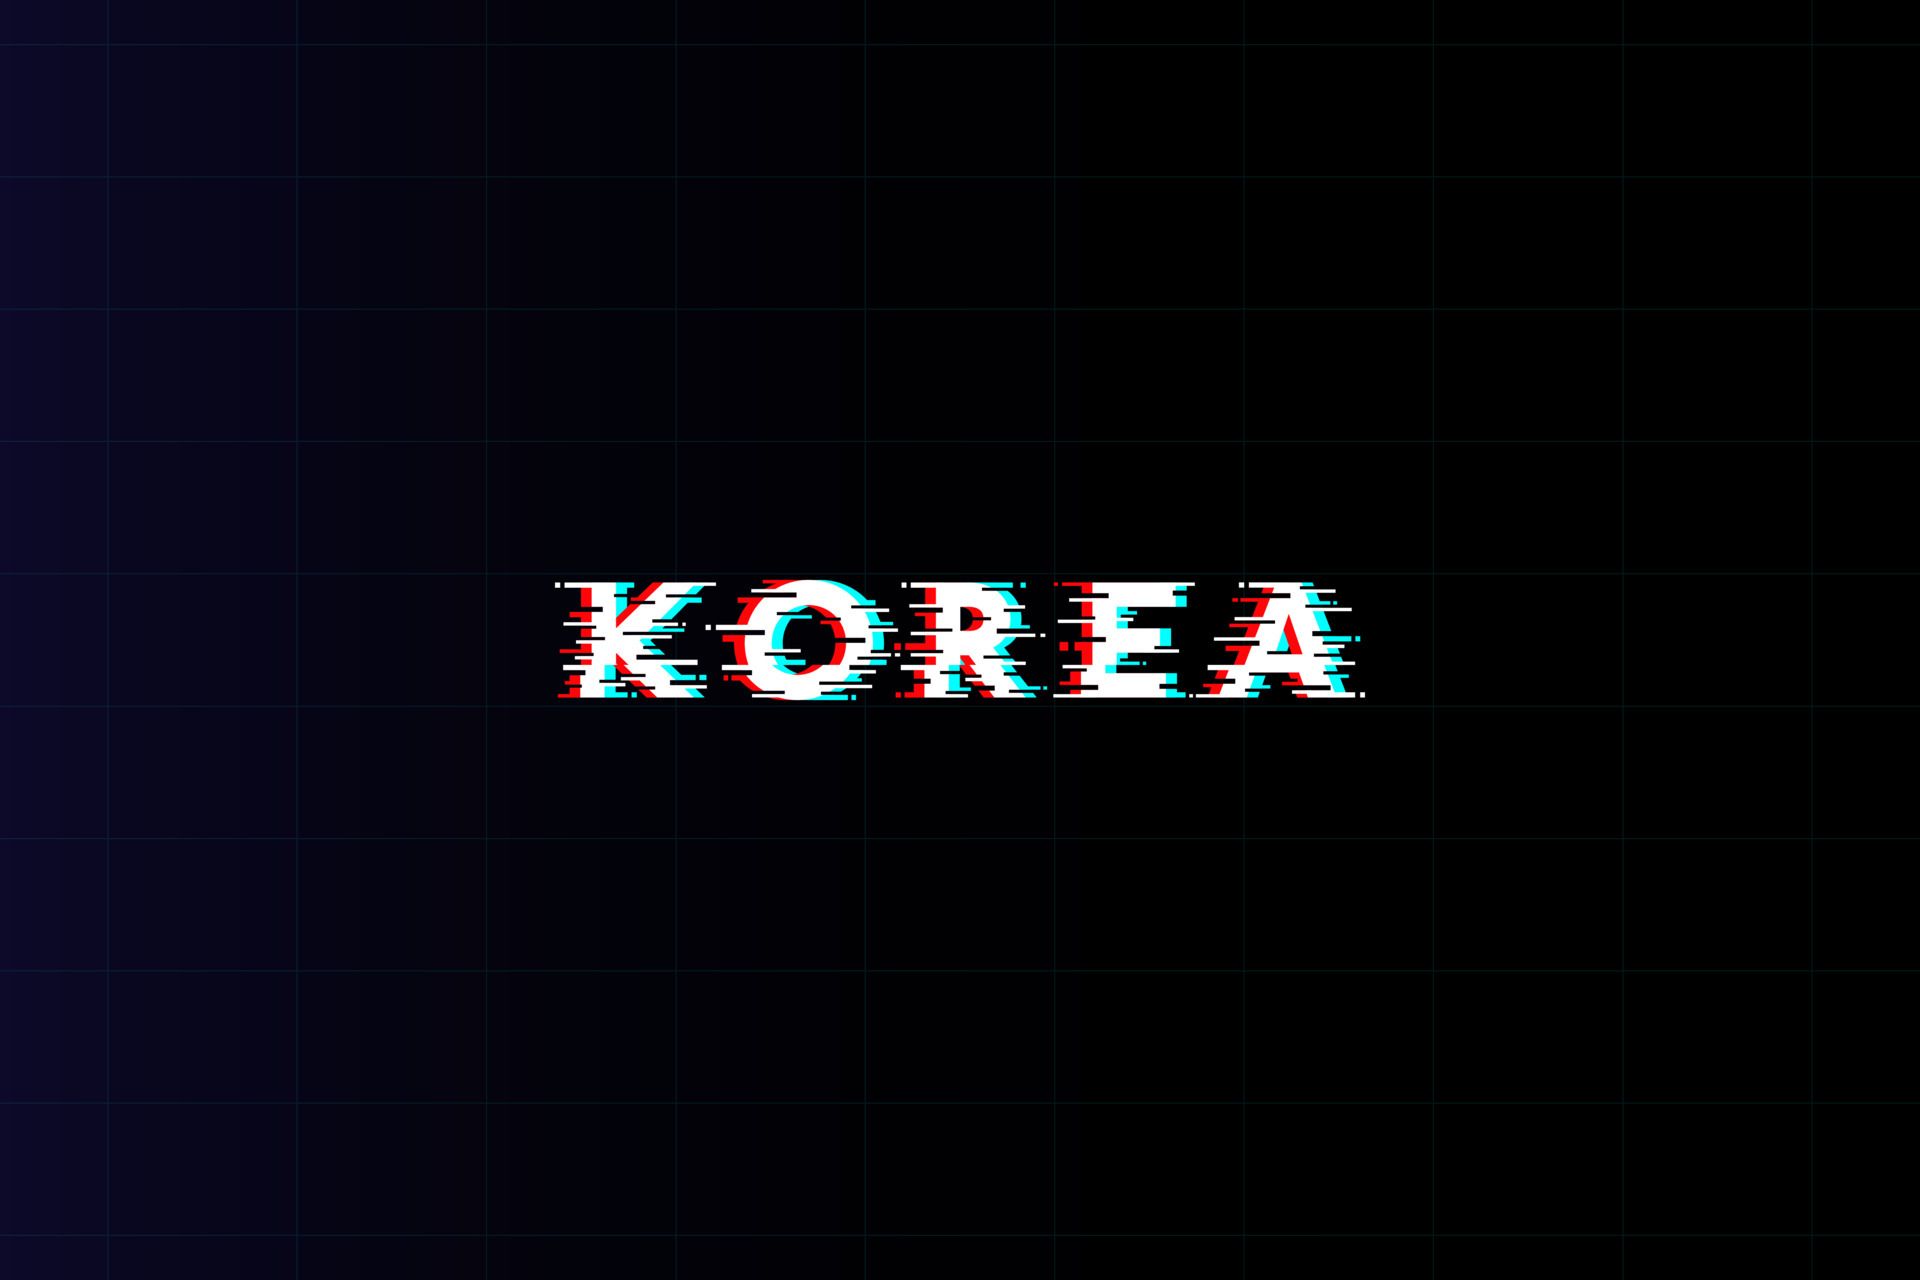 Glitchy Korean text on a black background - Glitch